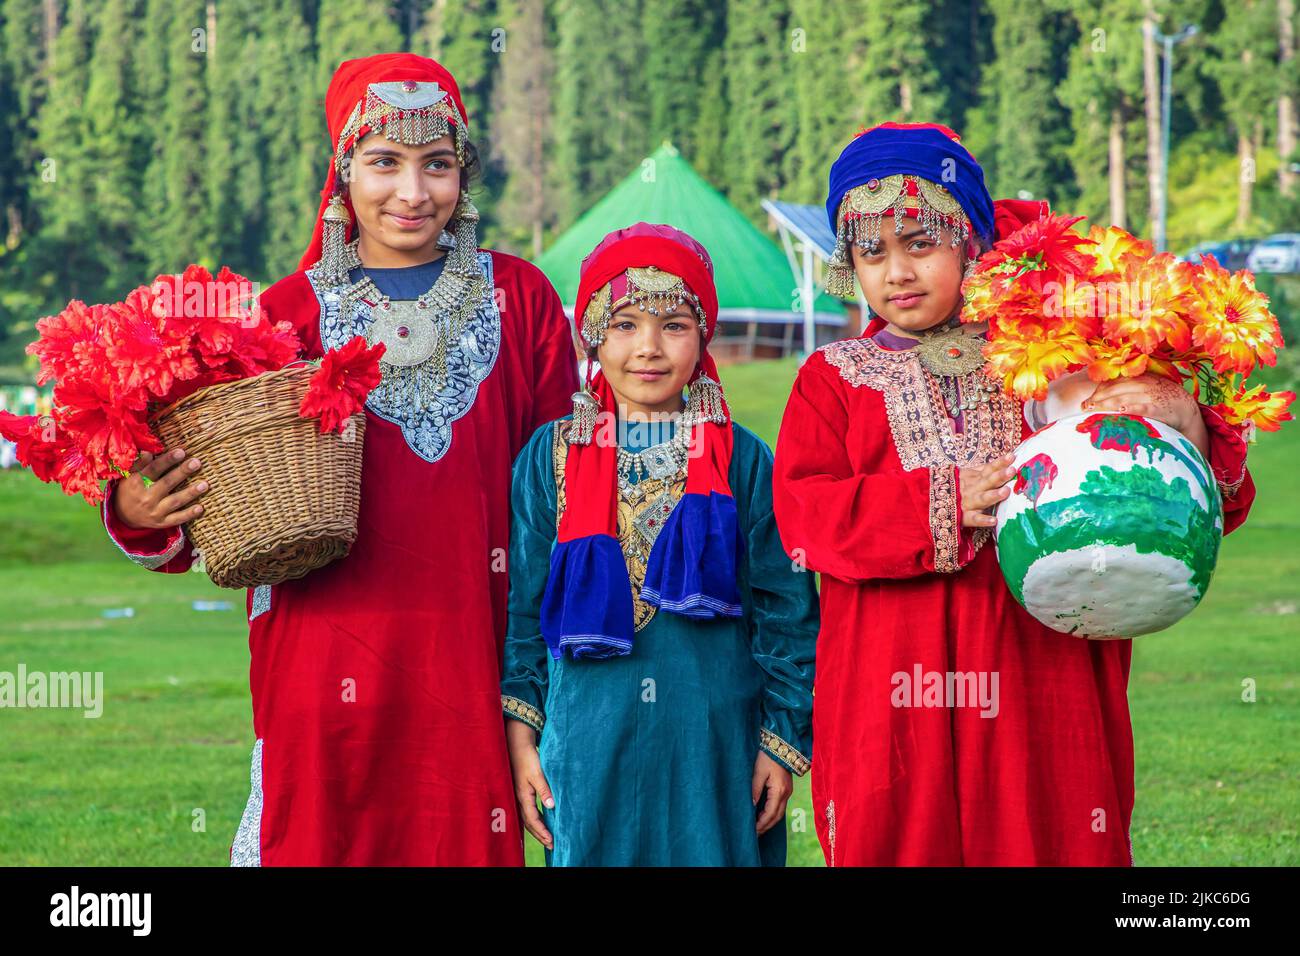 File:Traditional Dresses of Kashmir.jpg - Wikimedia Commons